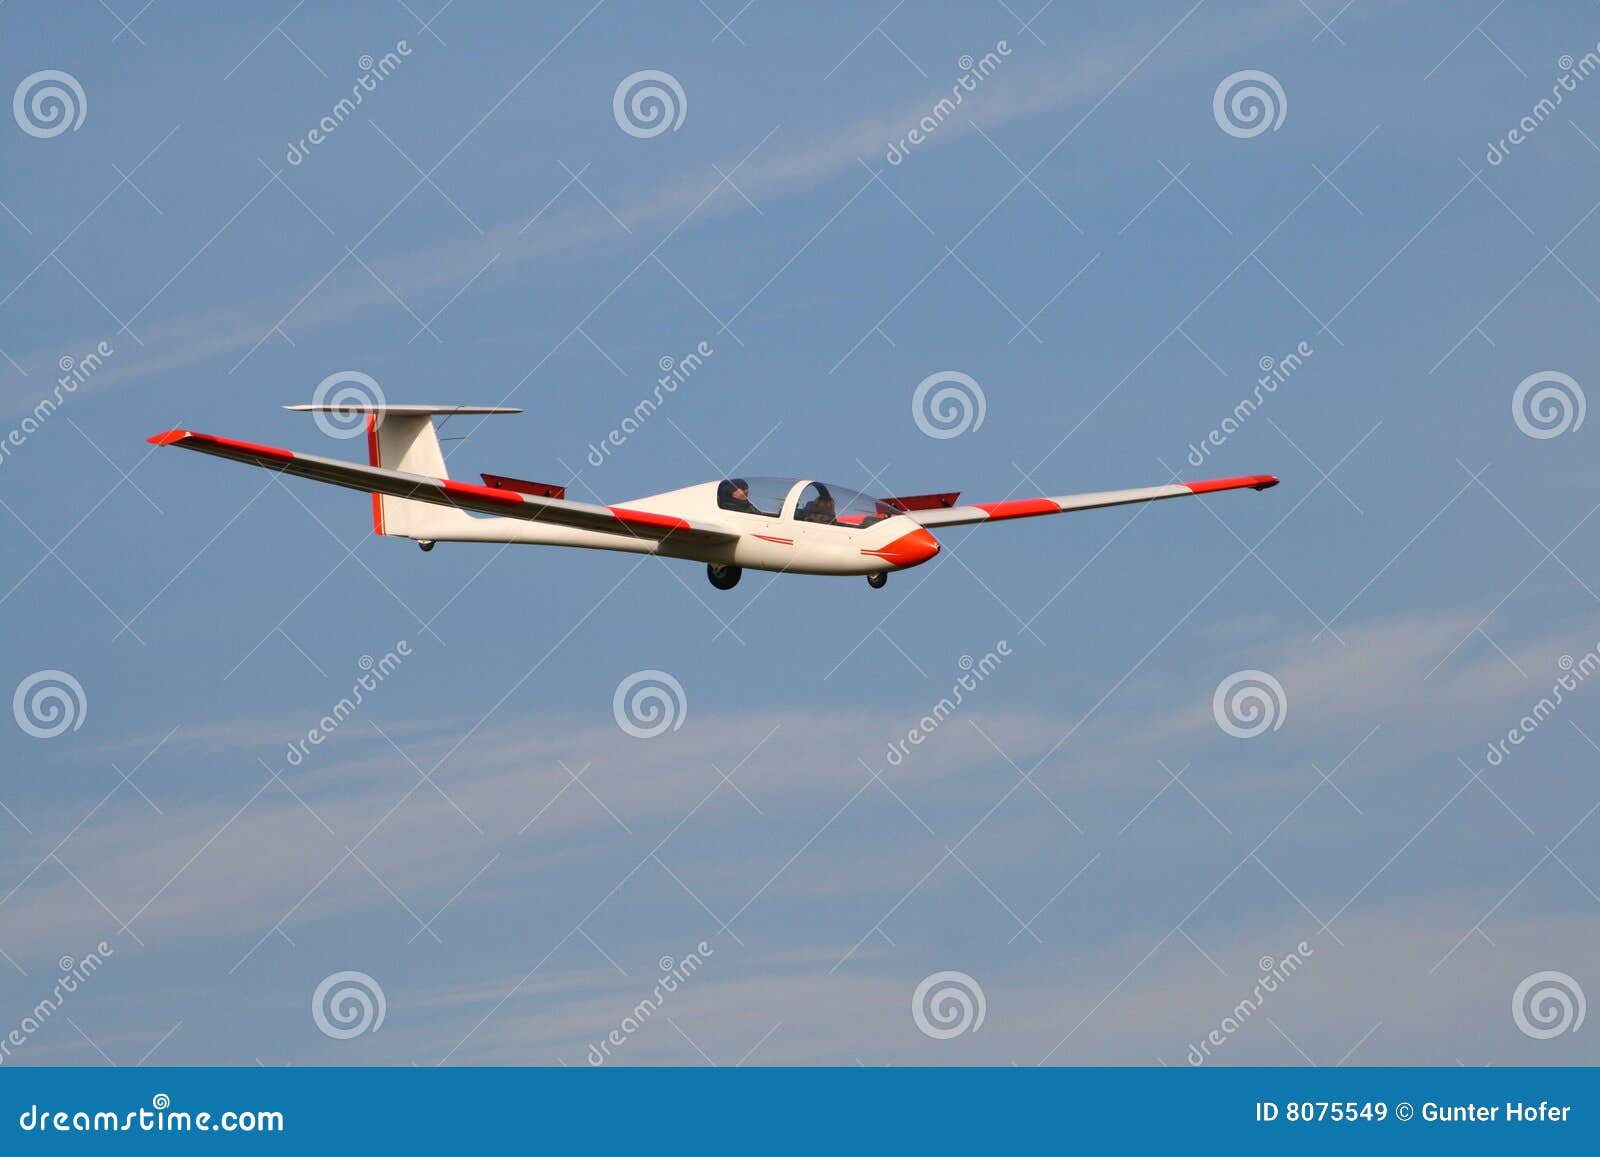 波兰J&AS Aero公司J6 Fregata观光滑翔机CGI渲染设计 - 普象网